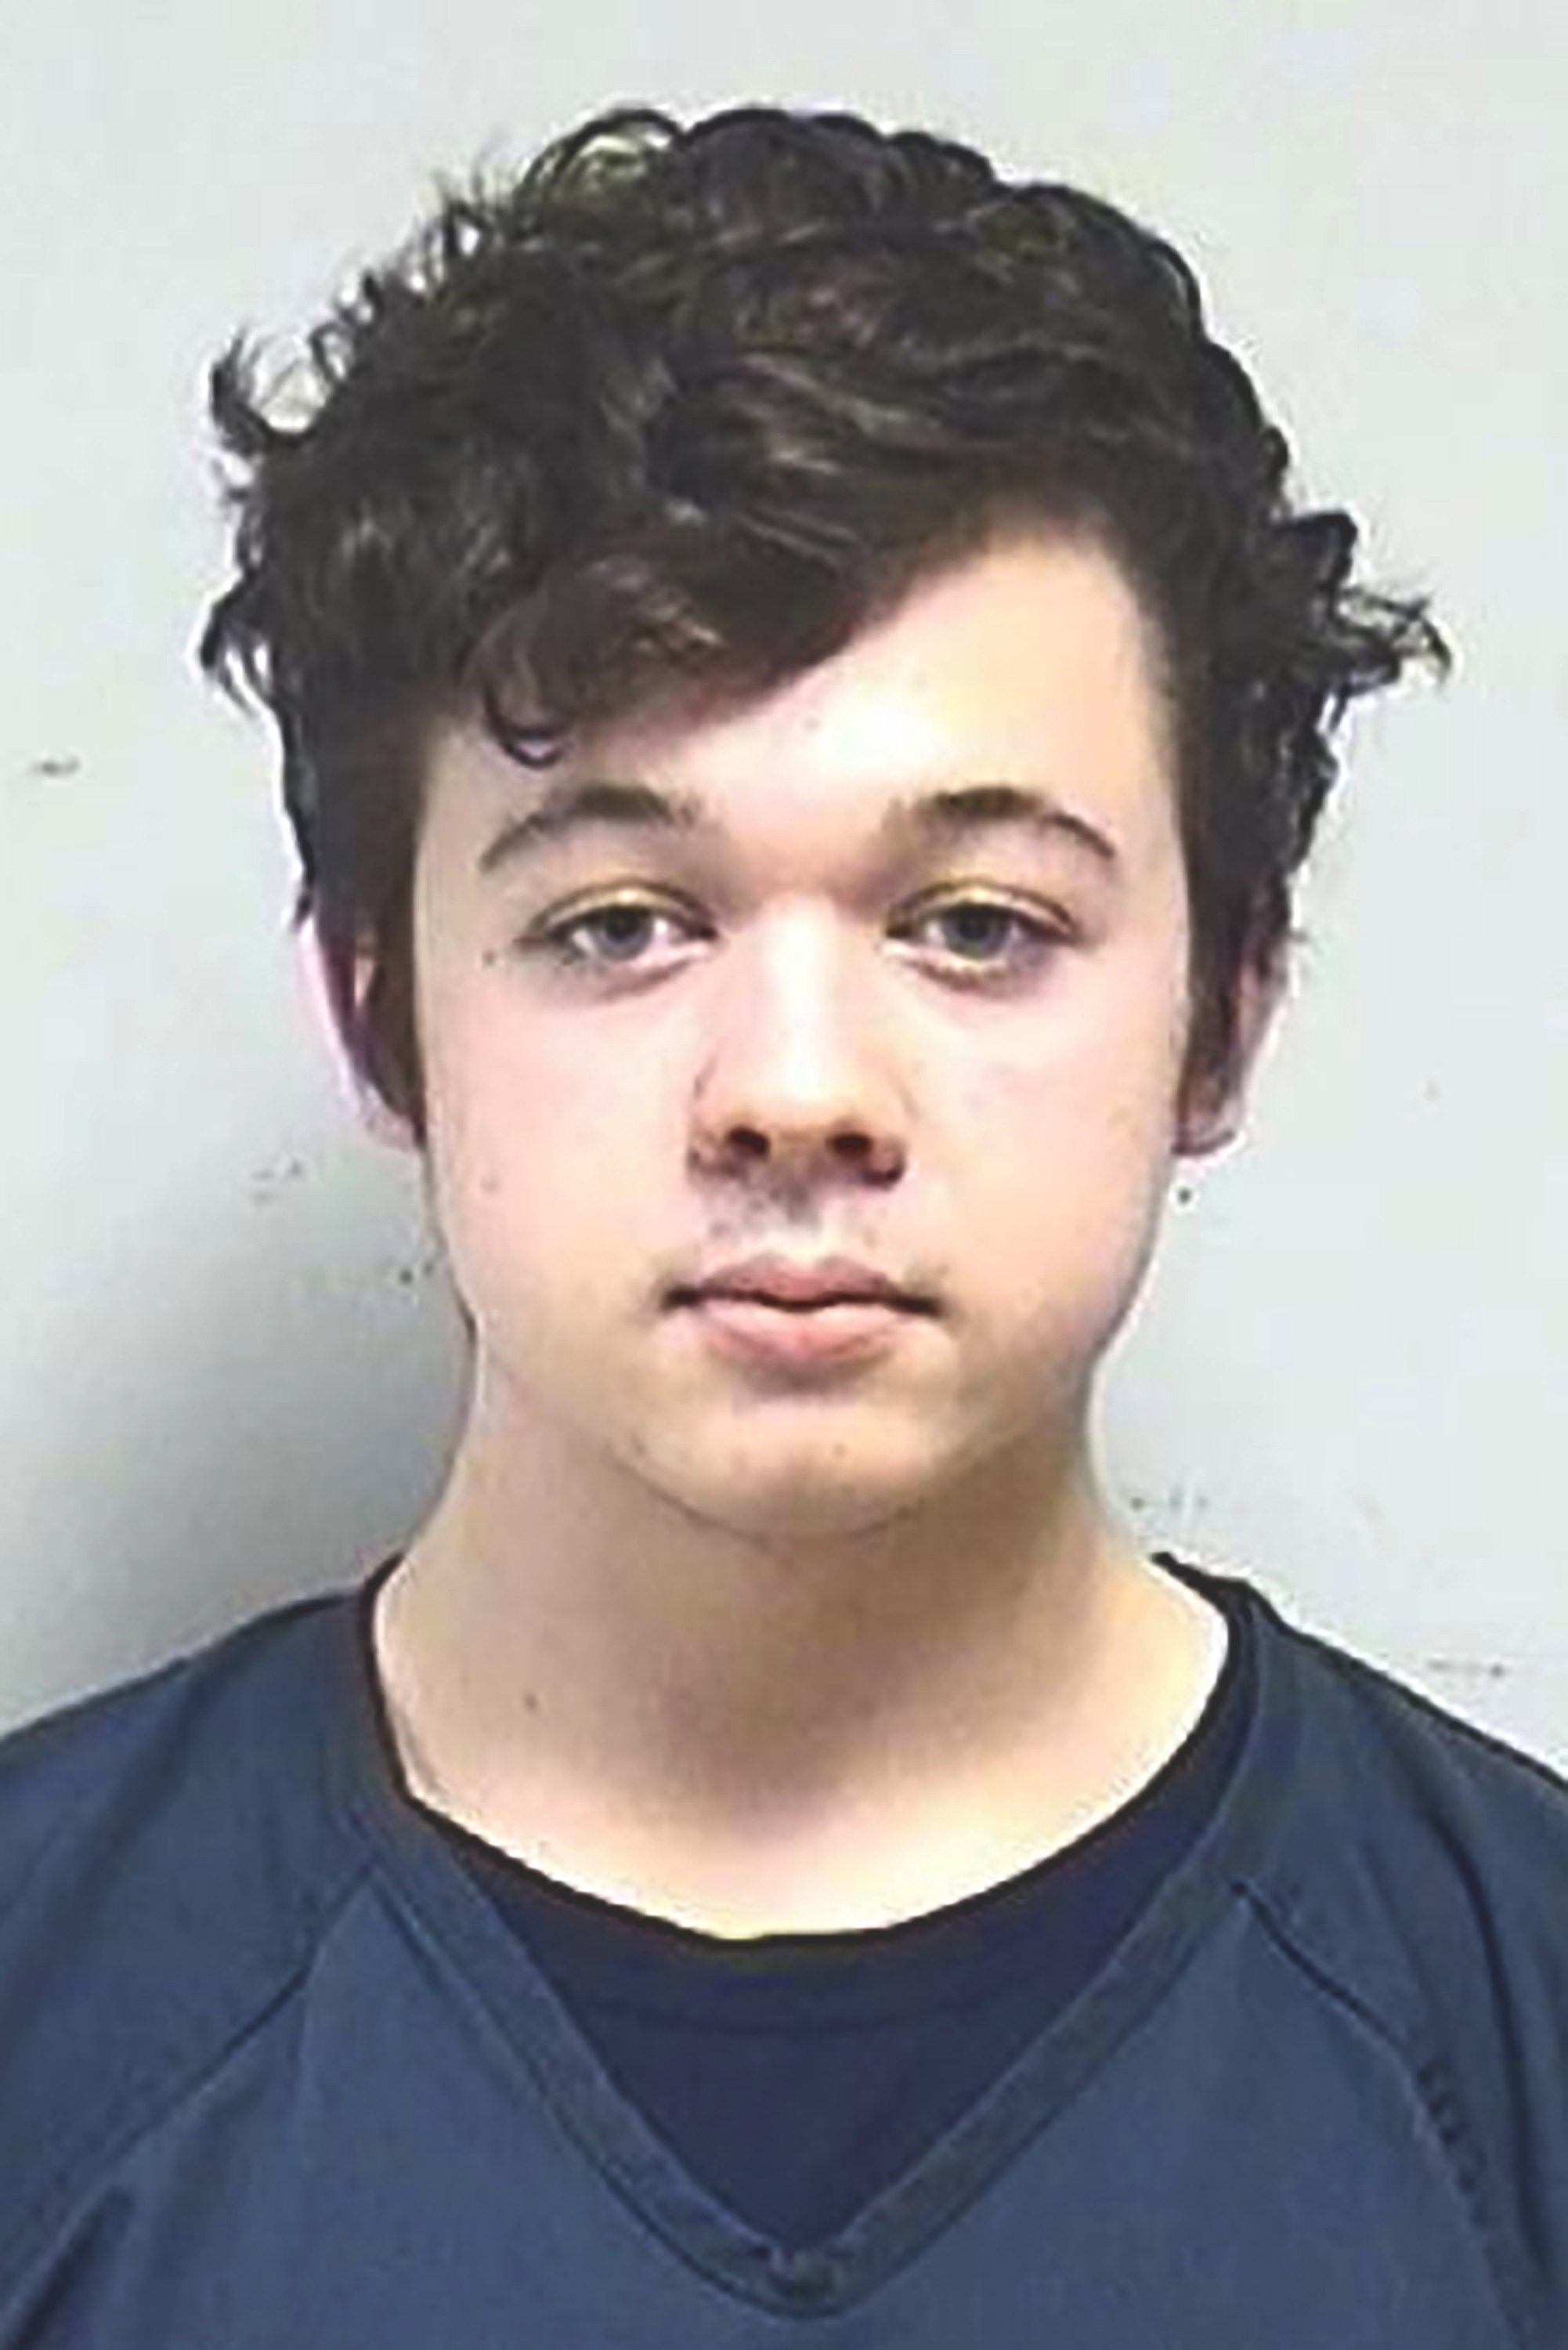 Illinois teen pleads not guilty to Kenosha protest murders